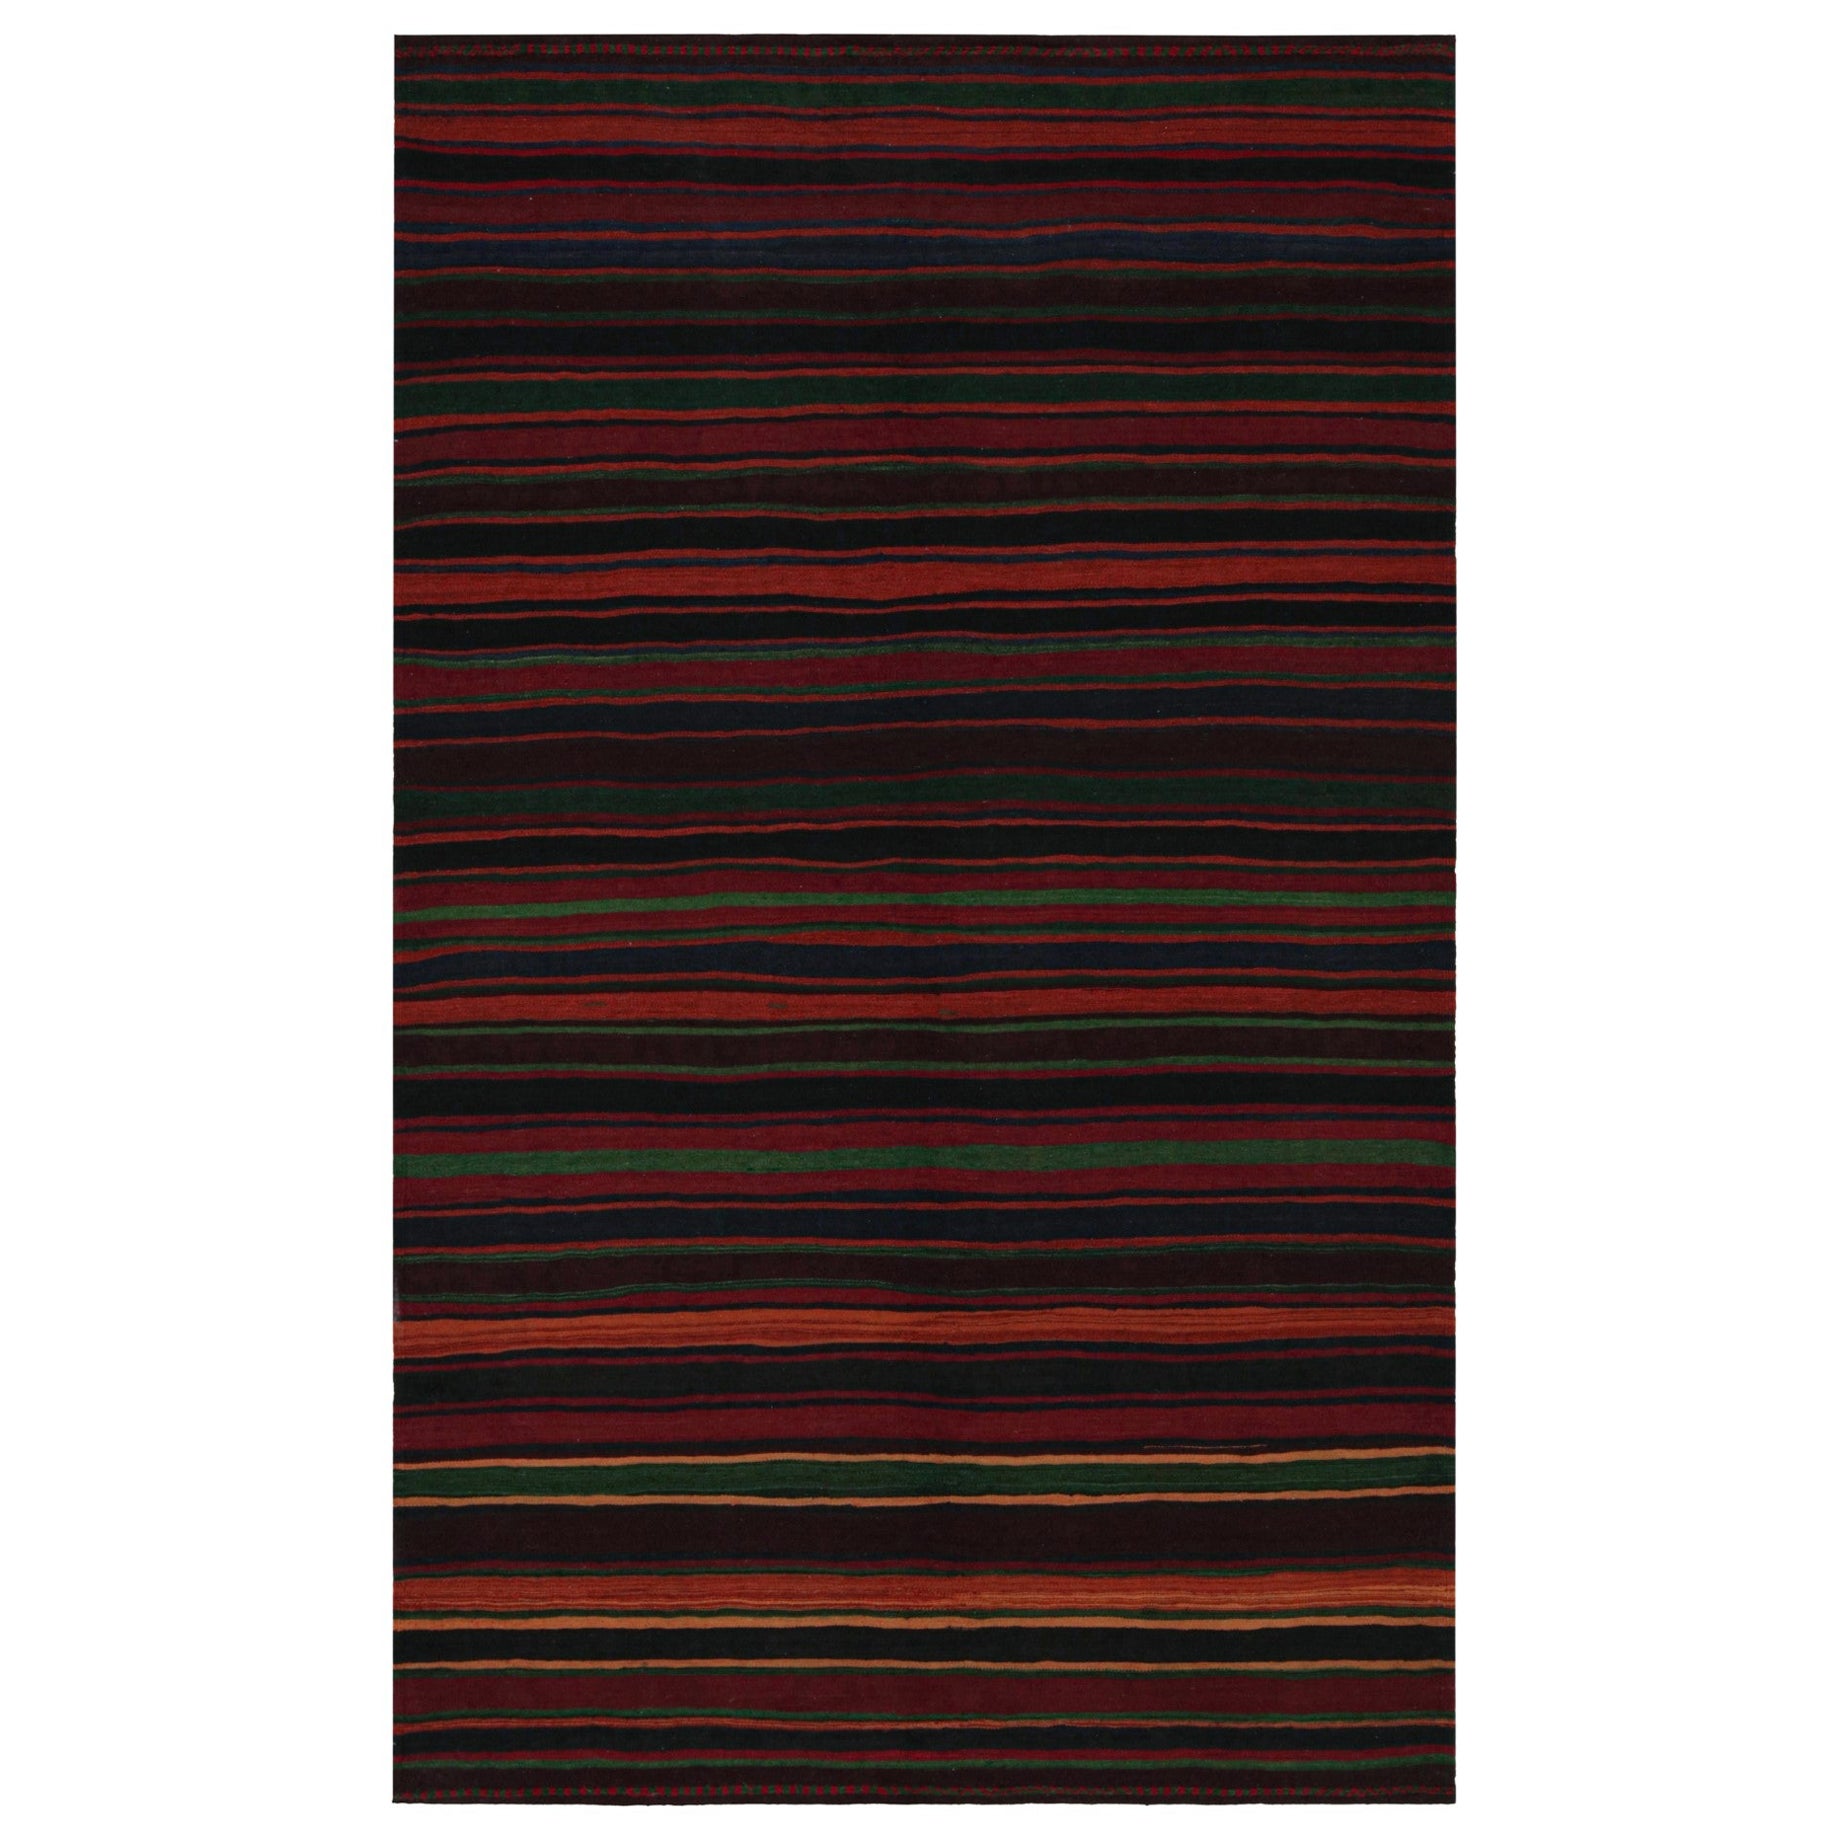 Vintage Afghan Tribal Kilim Rug with Colorful Stripes, from Rug & Kilim  For Sale